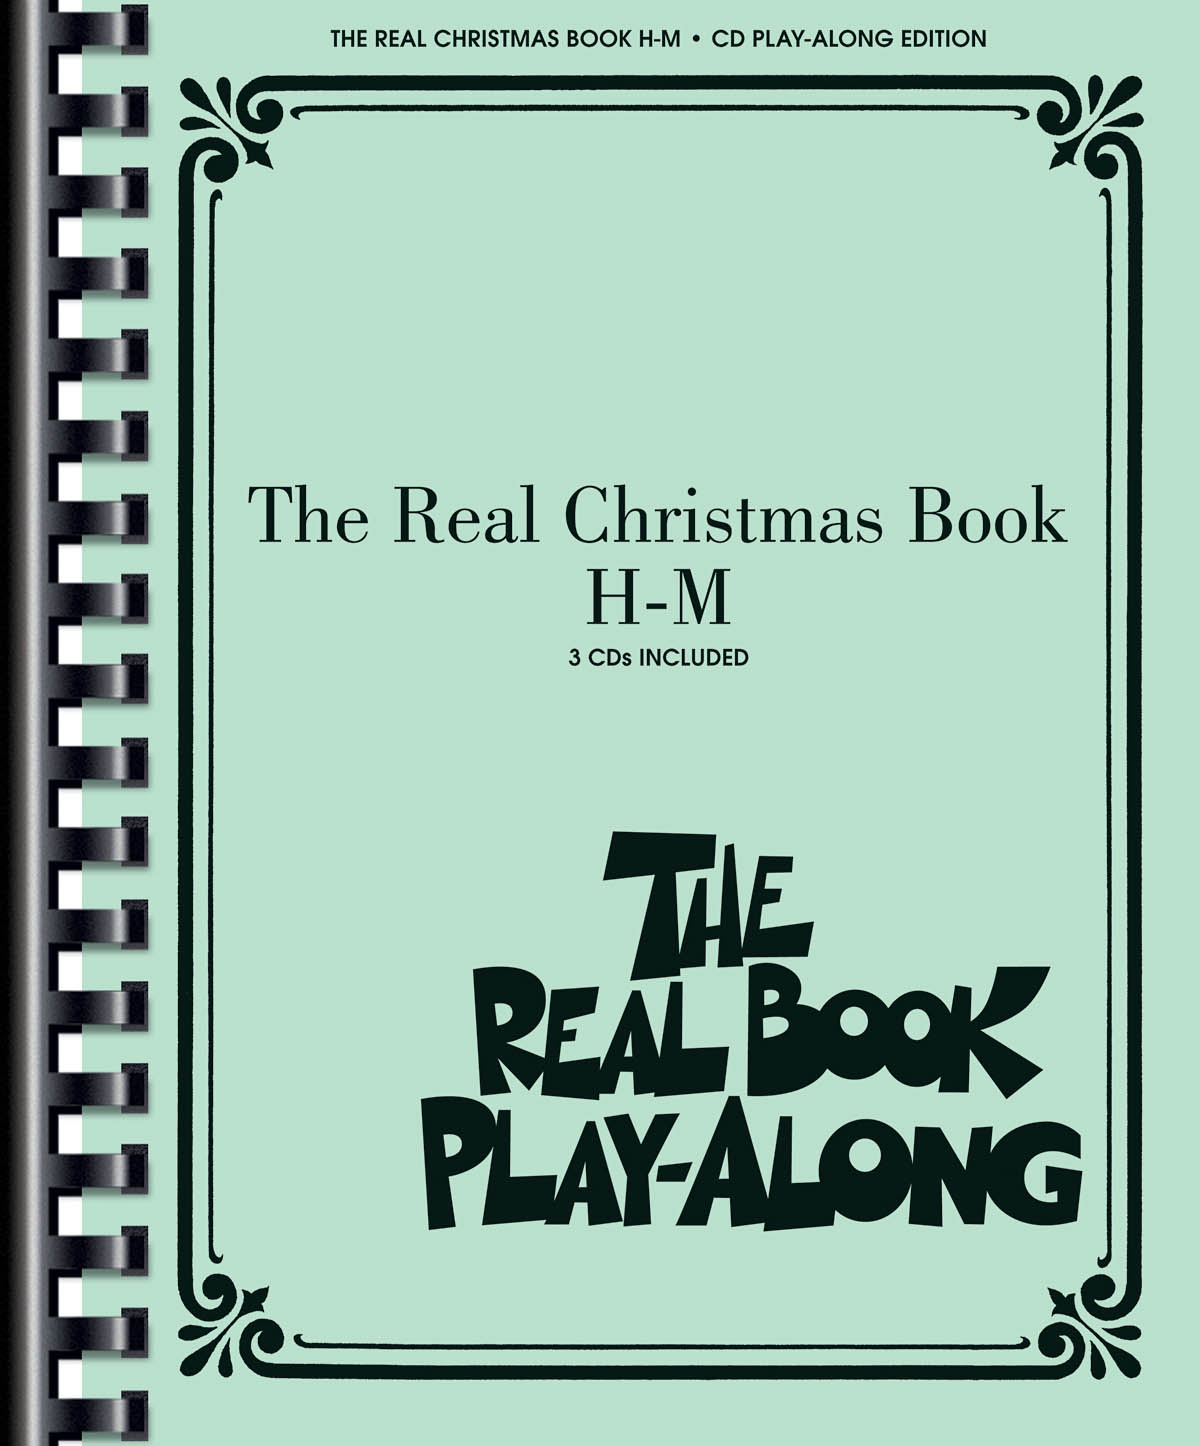 The Real Christmas Book Play-Along  Vol. H-M: Jazz Ensemble: CD